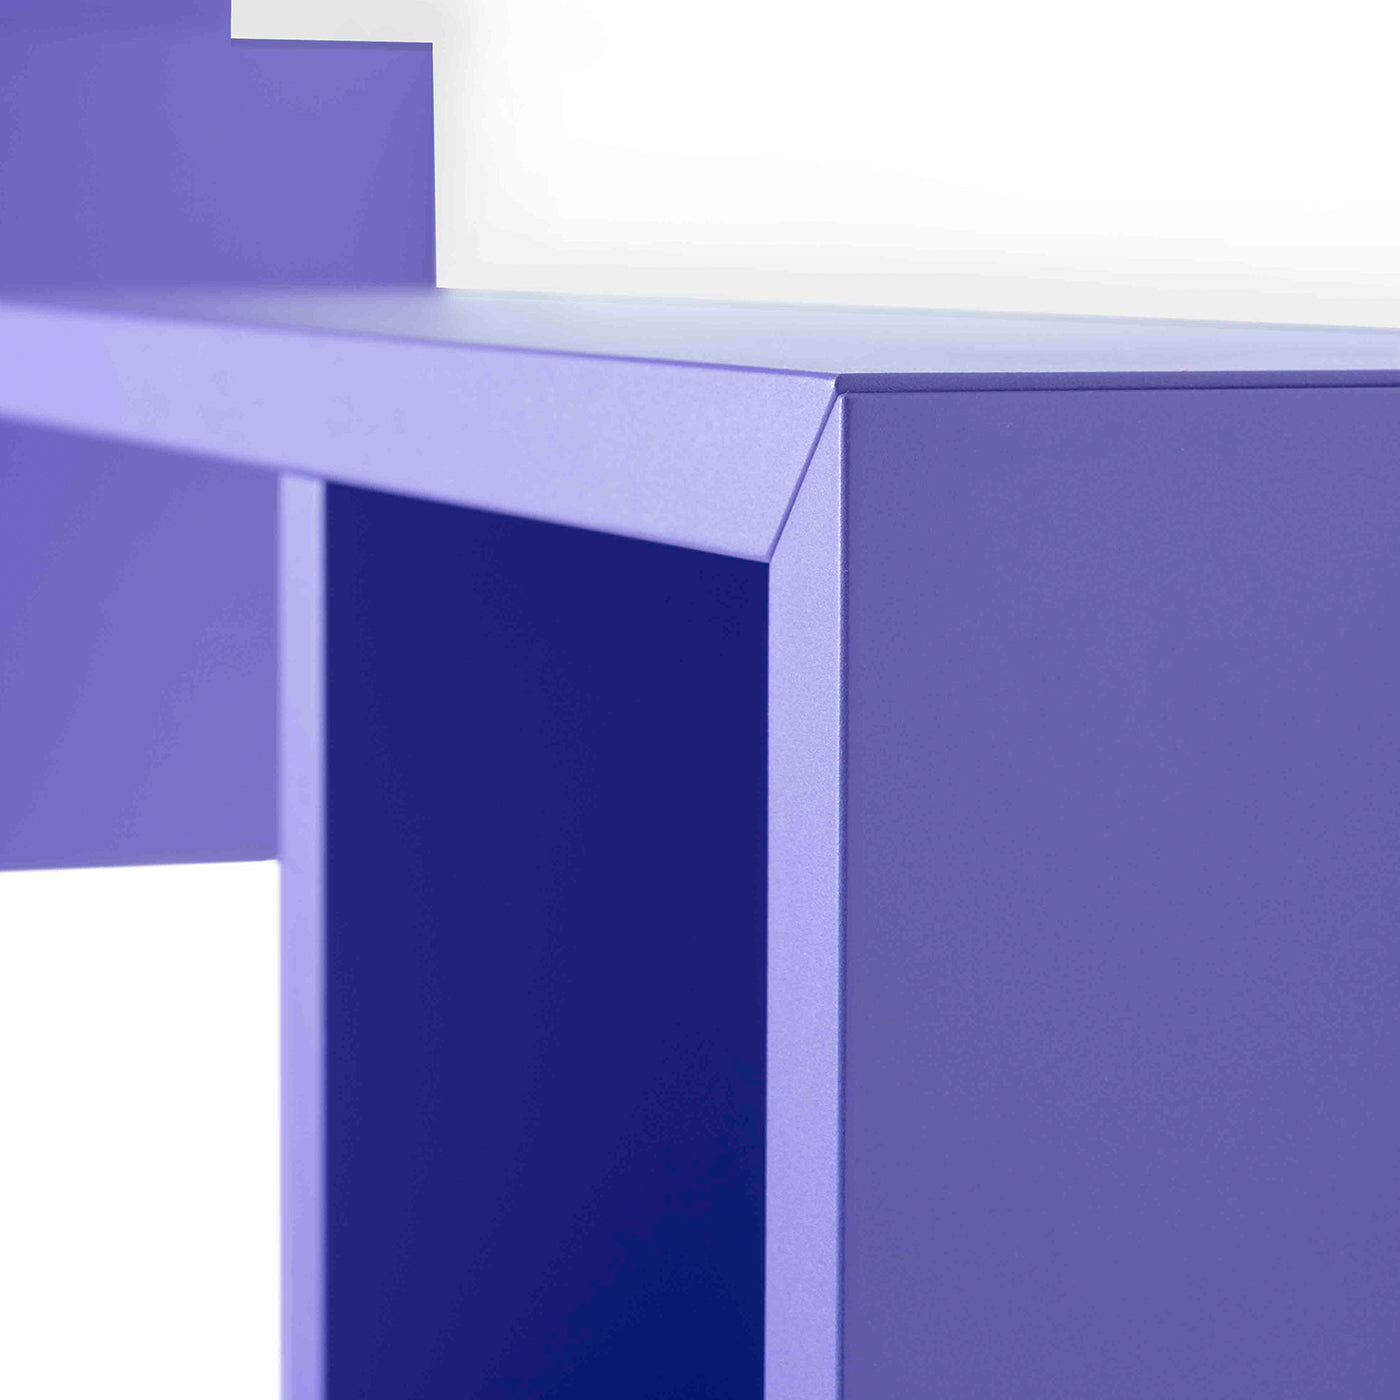 AL.96 Purple Shelf by Alan Cornolti - Alternative view 1